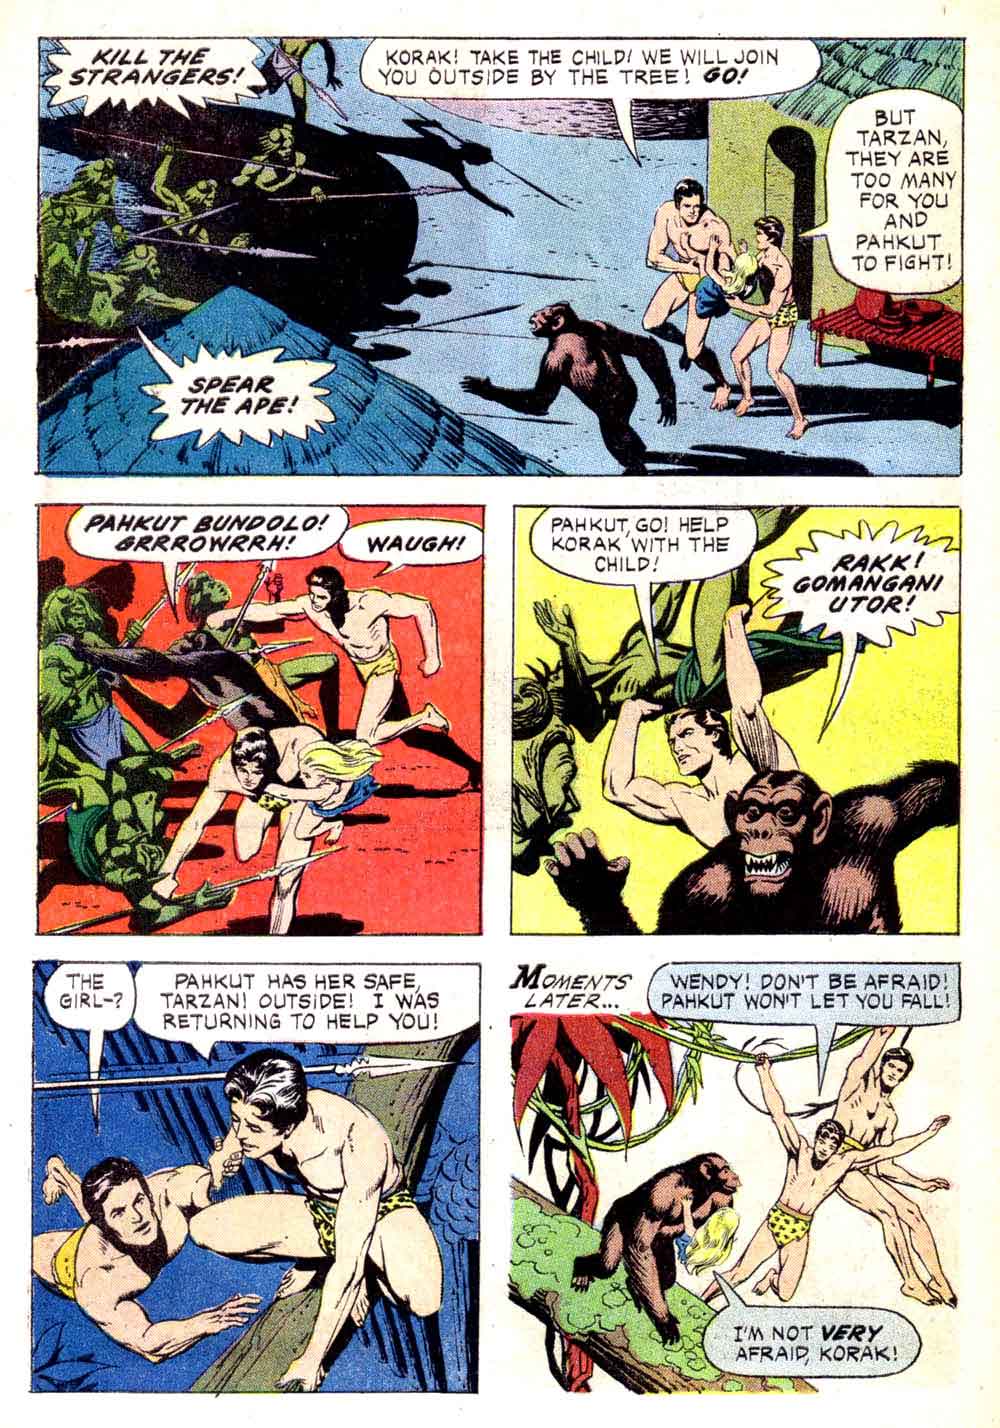 Korak Son of Tarzan v1 #1 gold key silver age 1960s comic book page art by Russ Manning